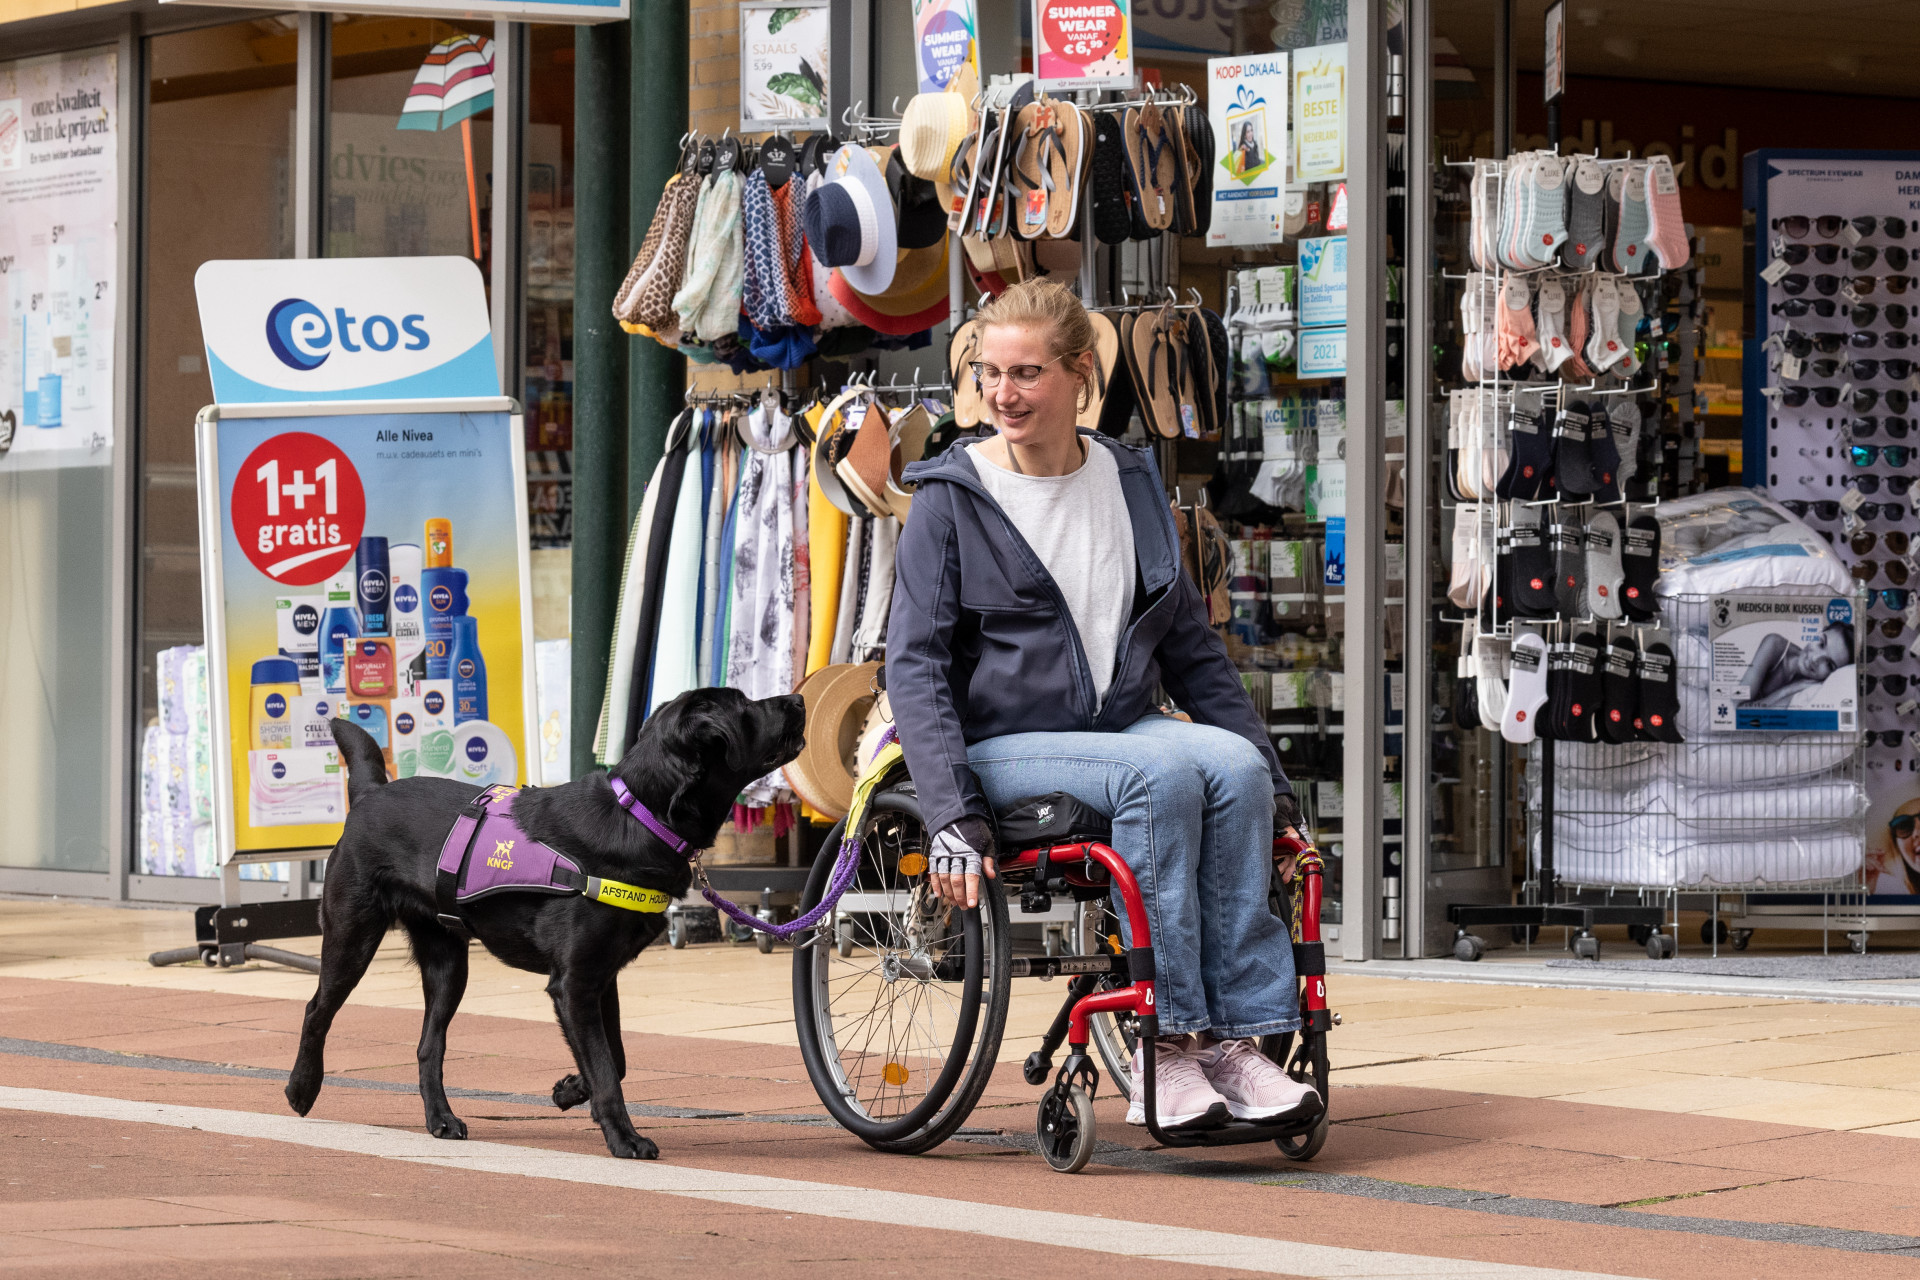 Nynke in haar rolstoel in een winkelstraat, Jissa loopt naast haar